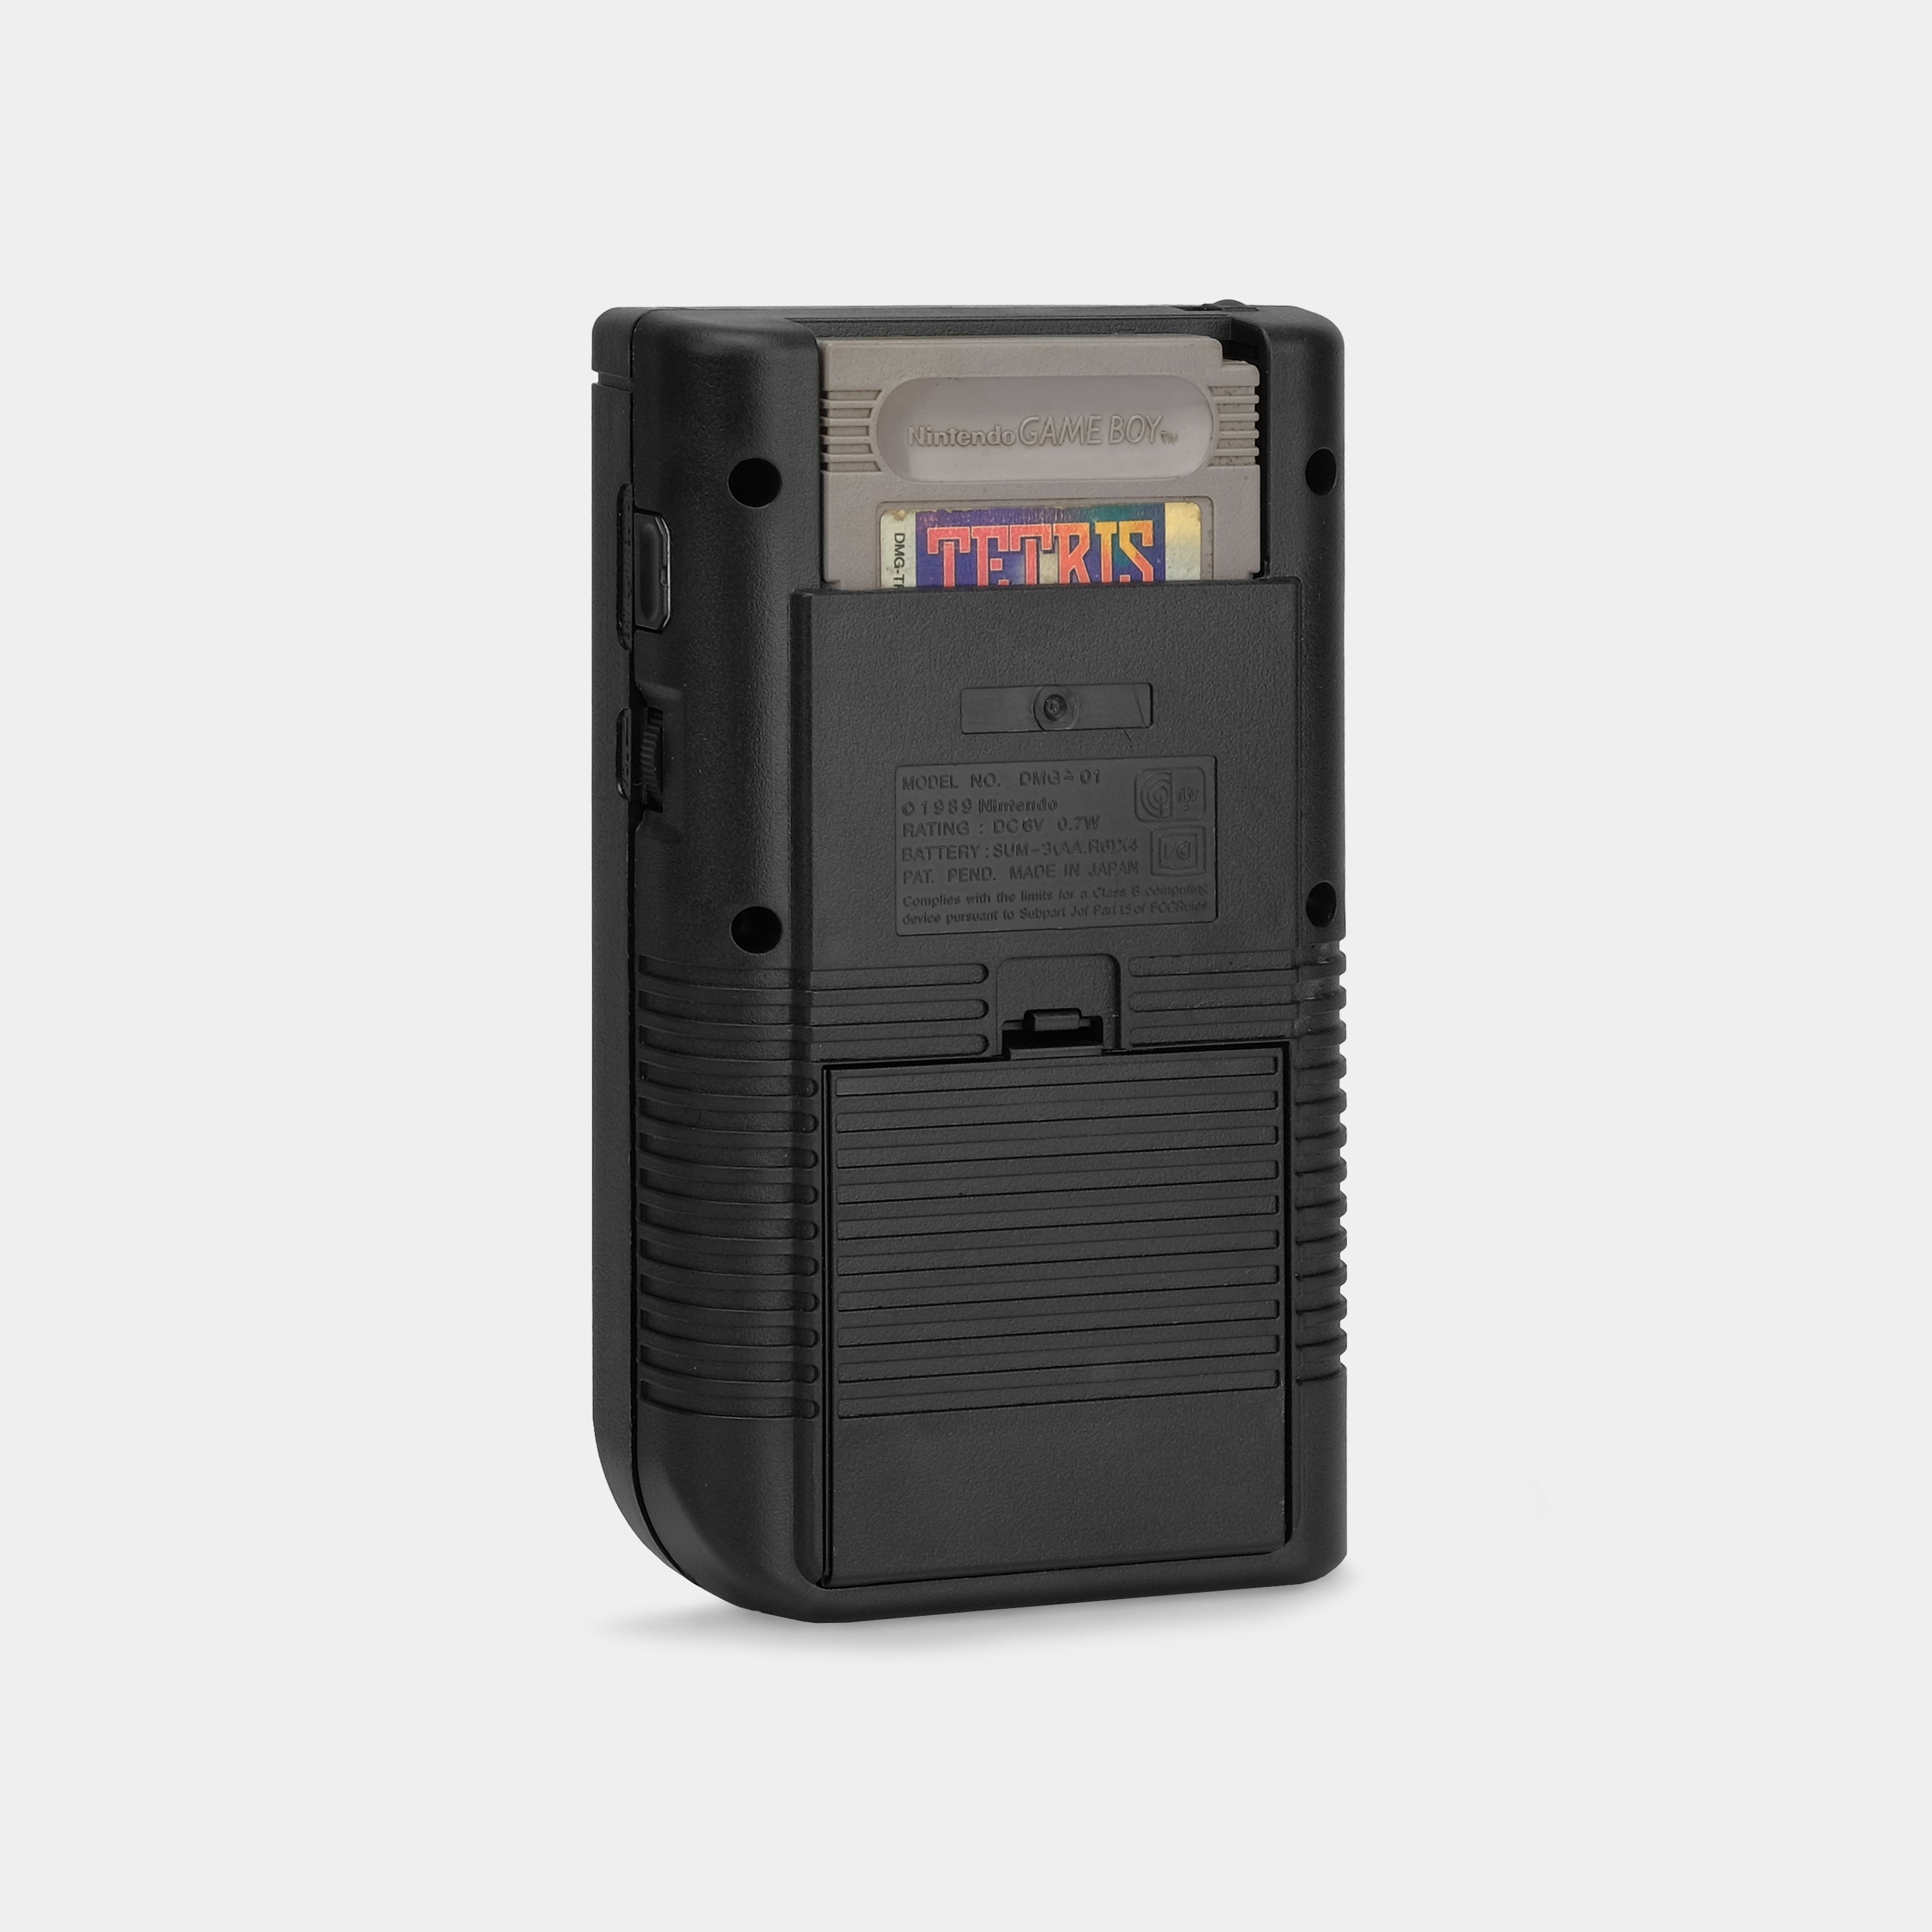 Nintendo Game Boy Black Game Console